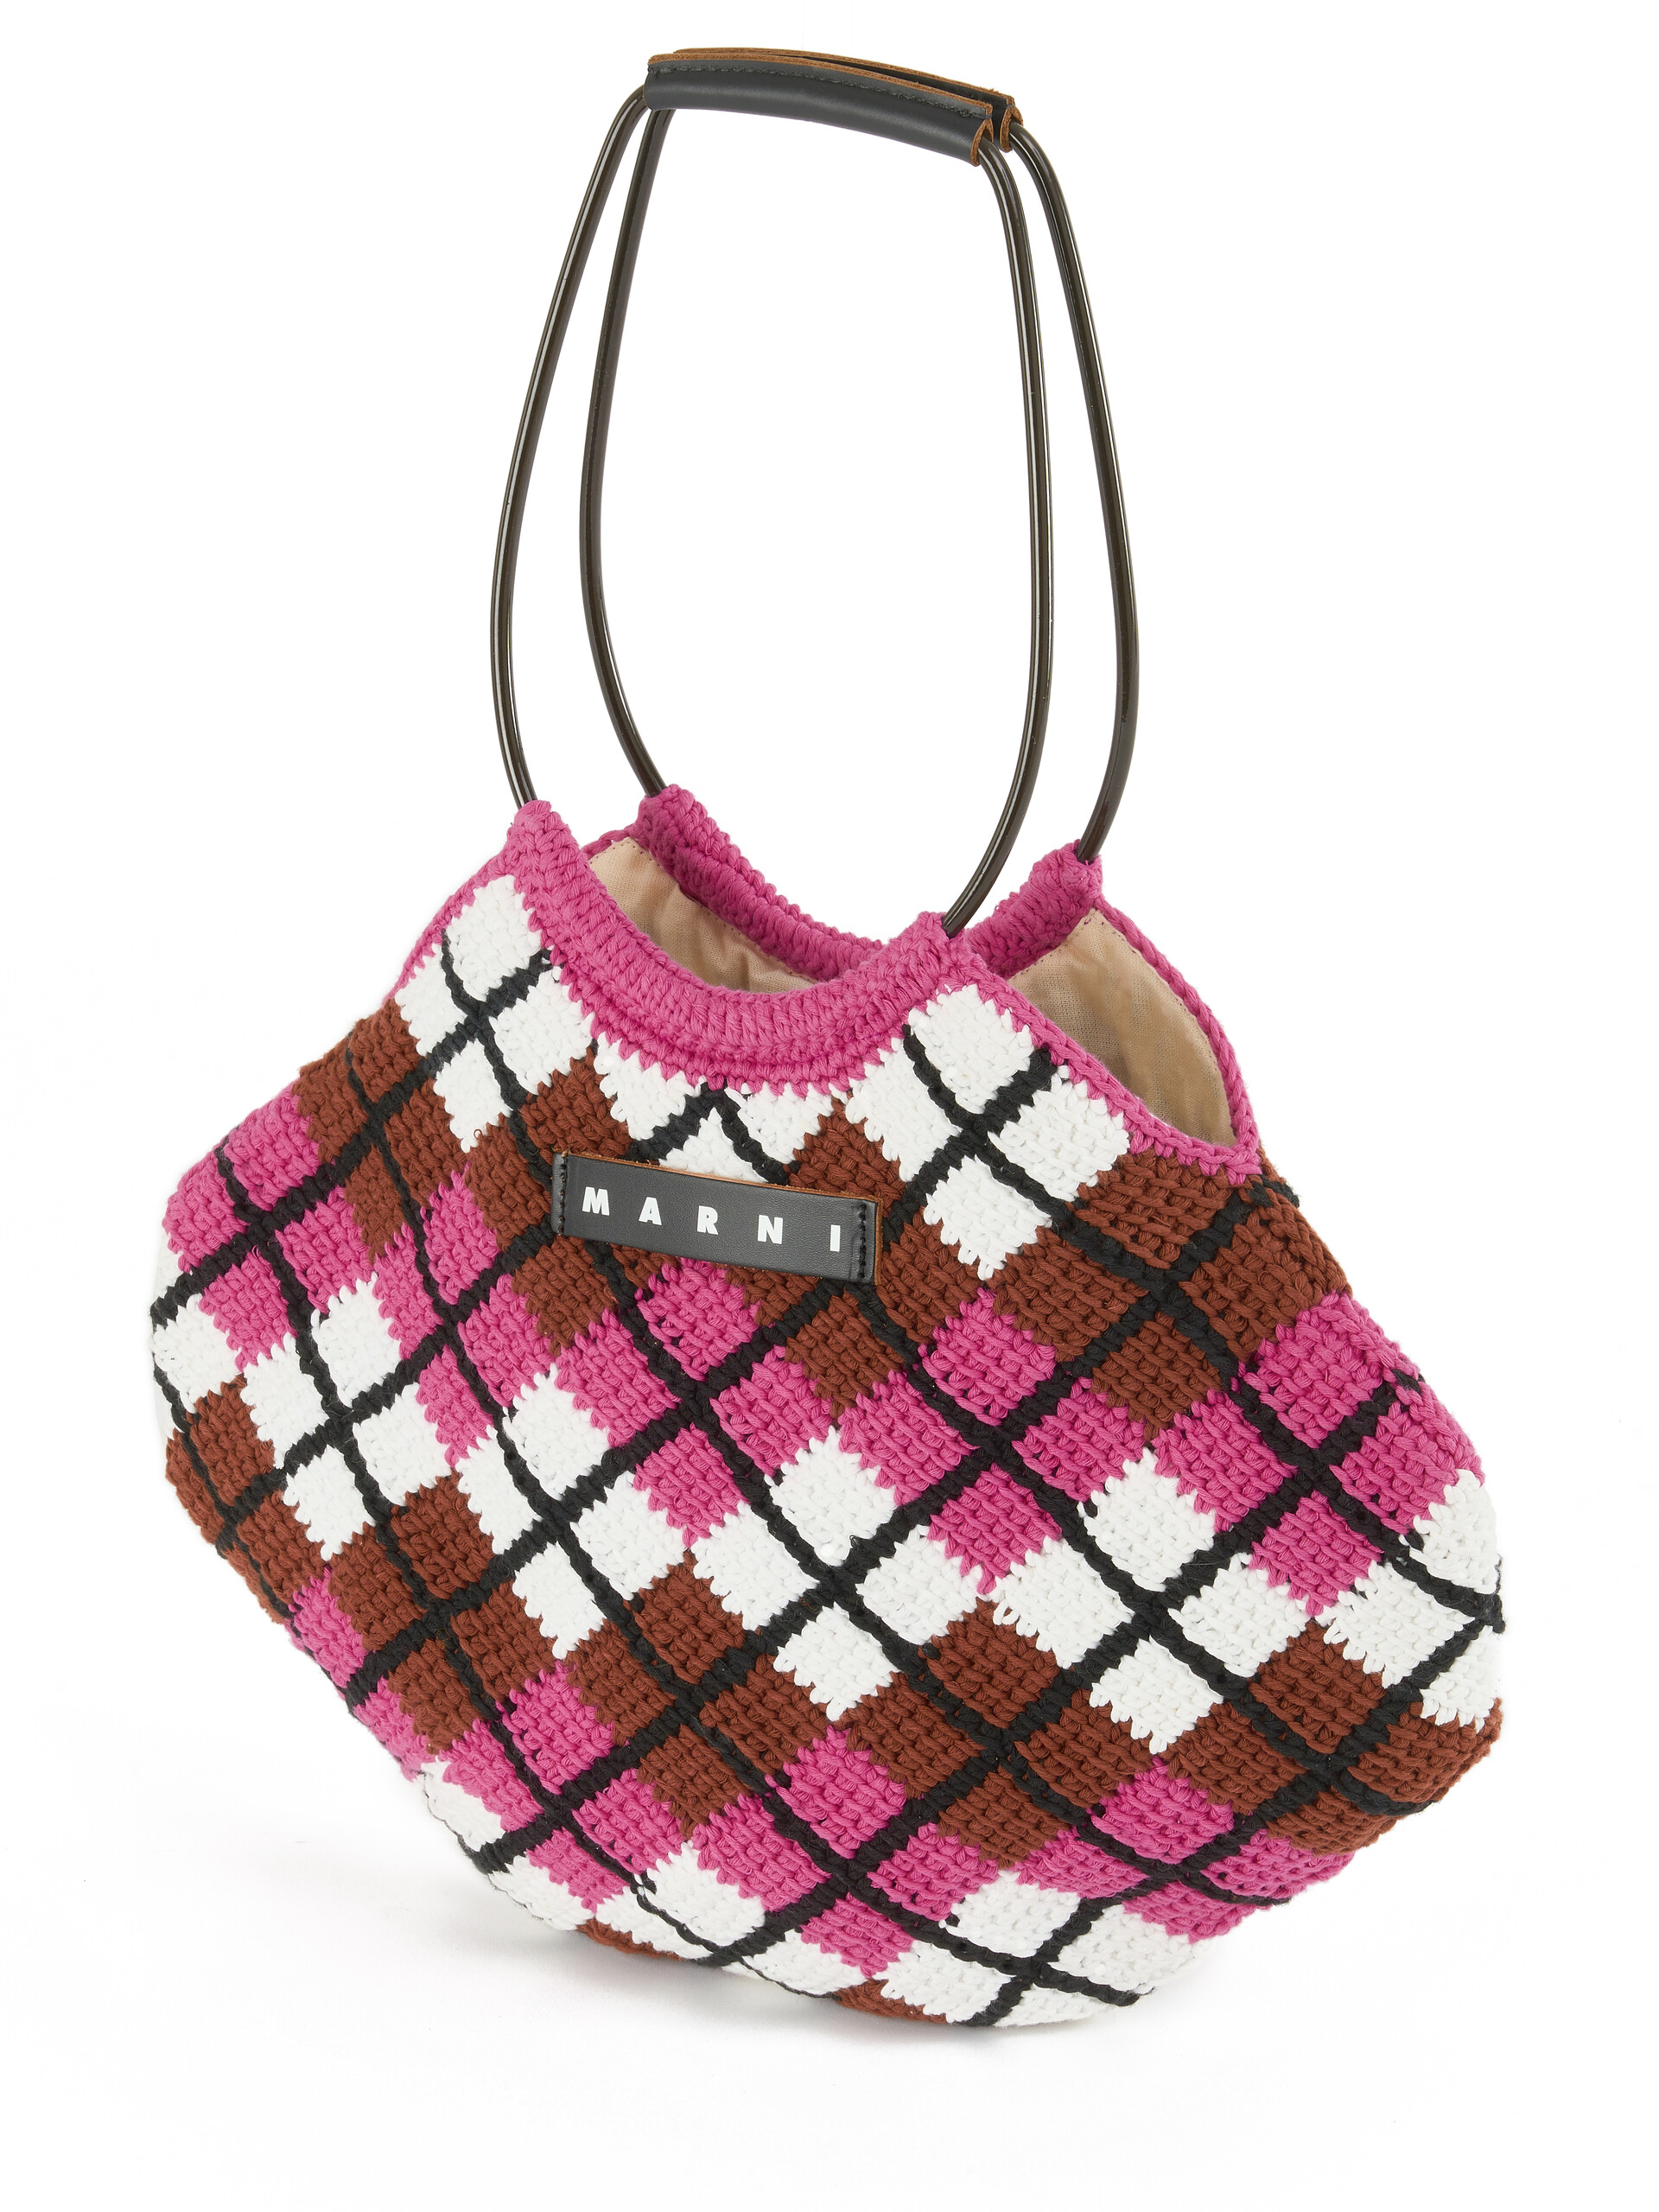 Borsa a mano MARNI MARKET in maglia a rombi rosa - Borse shopping - Image 4